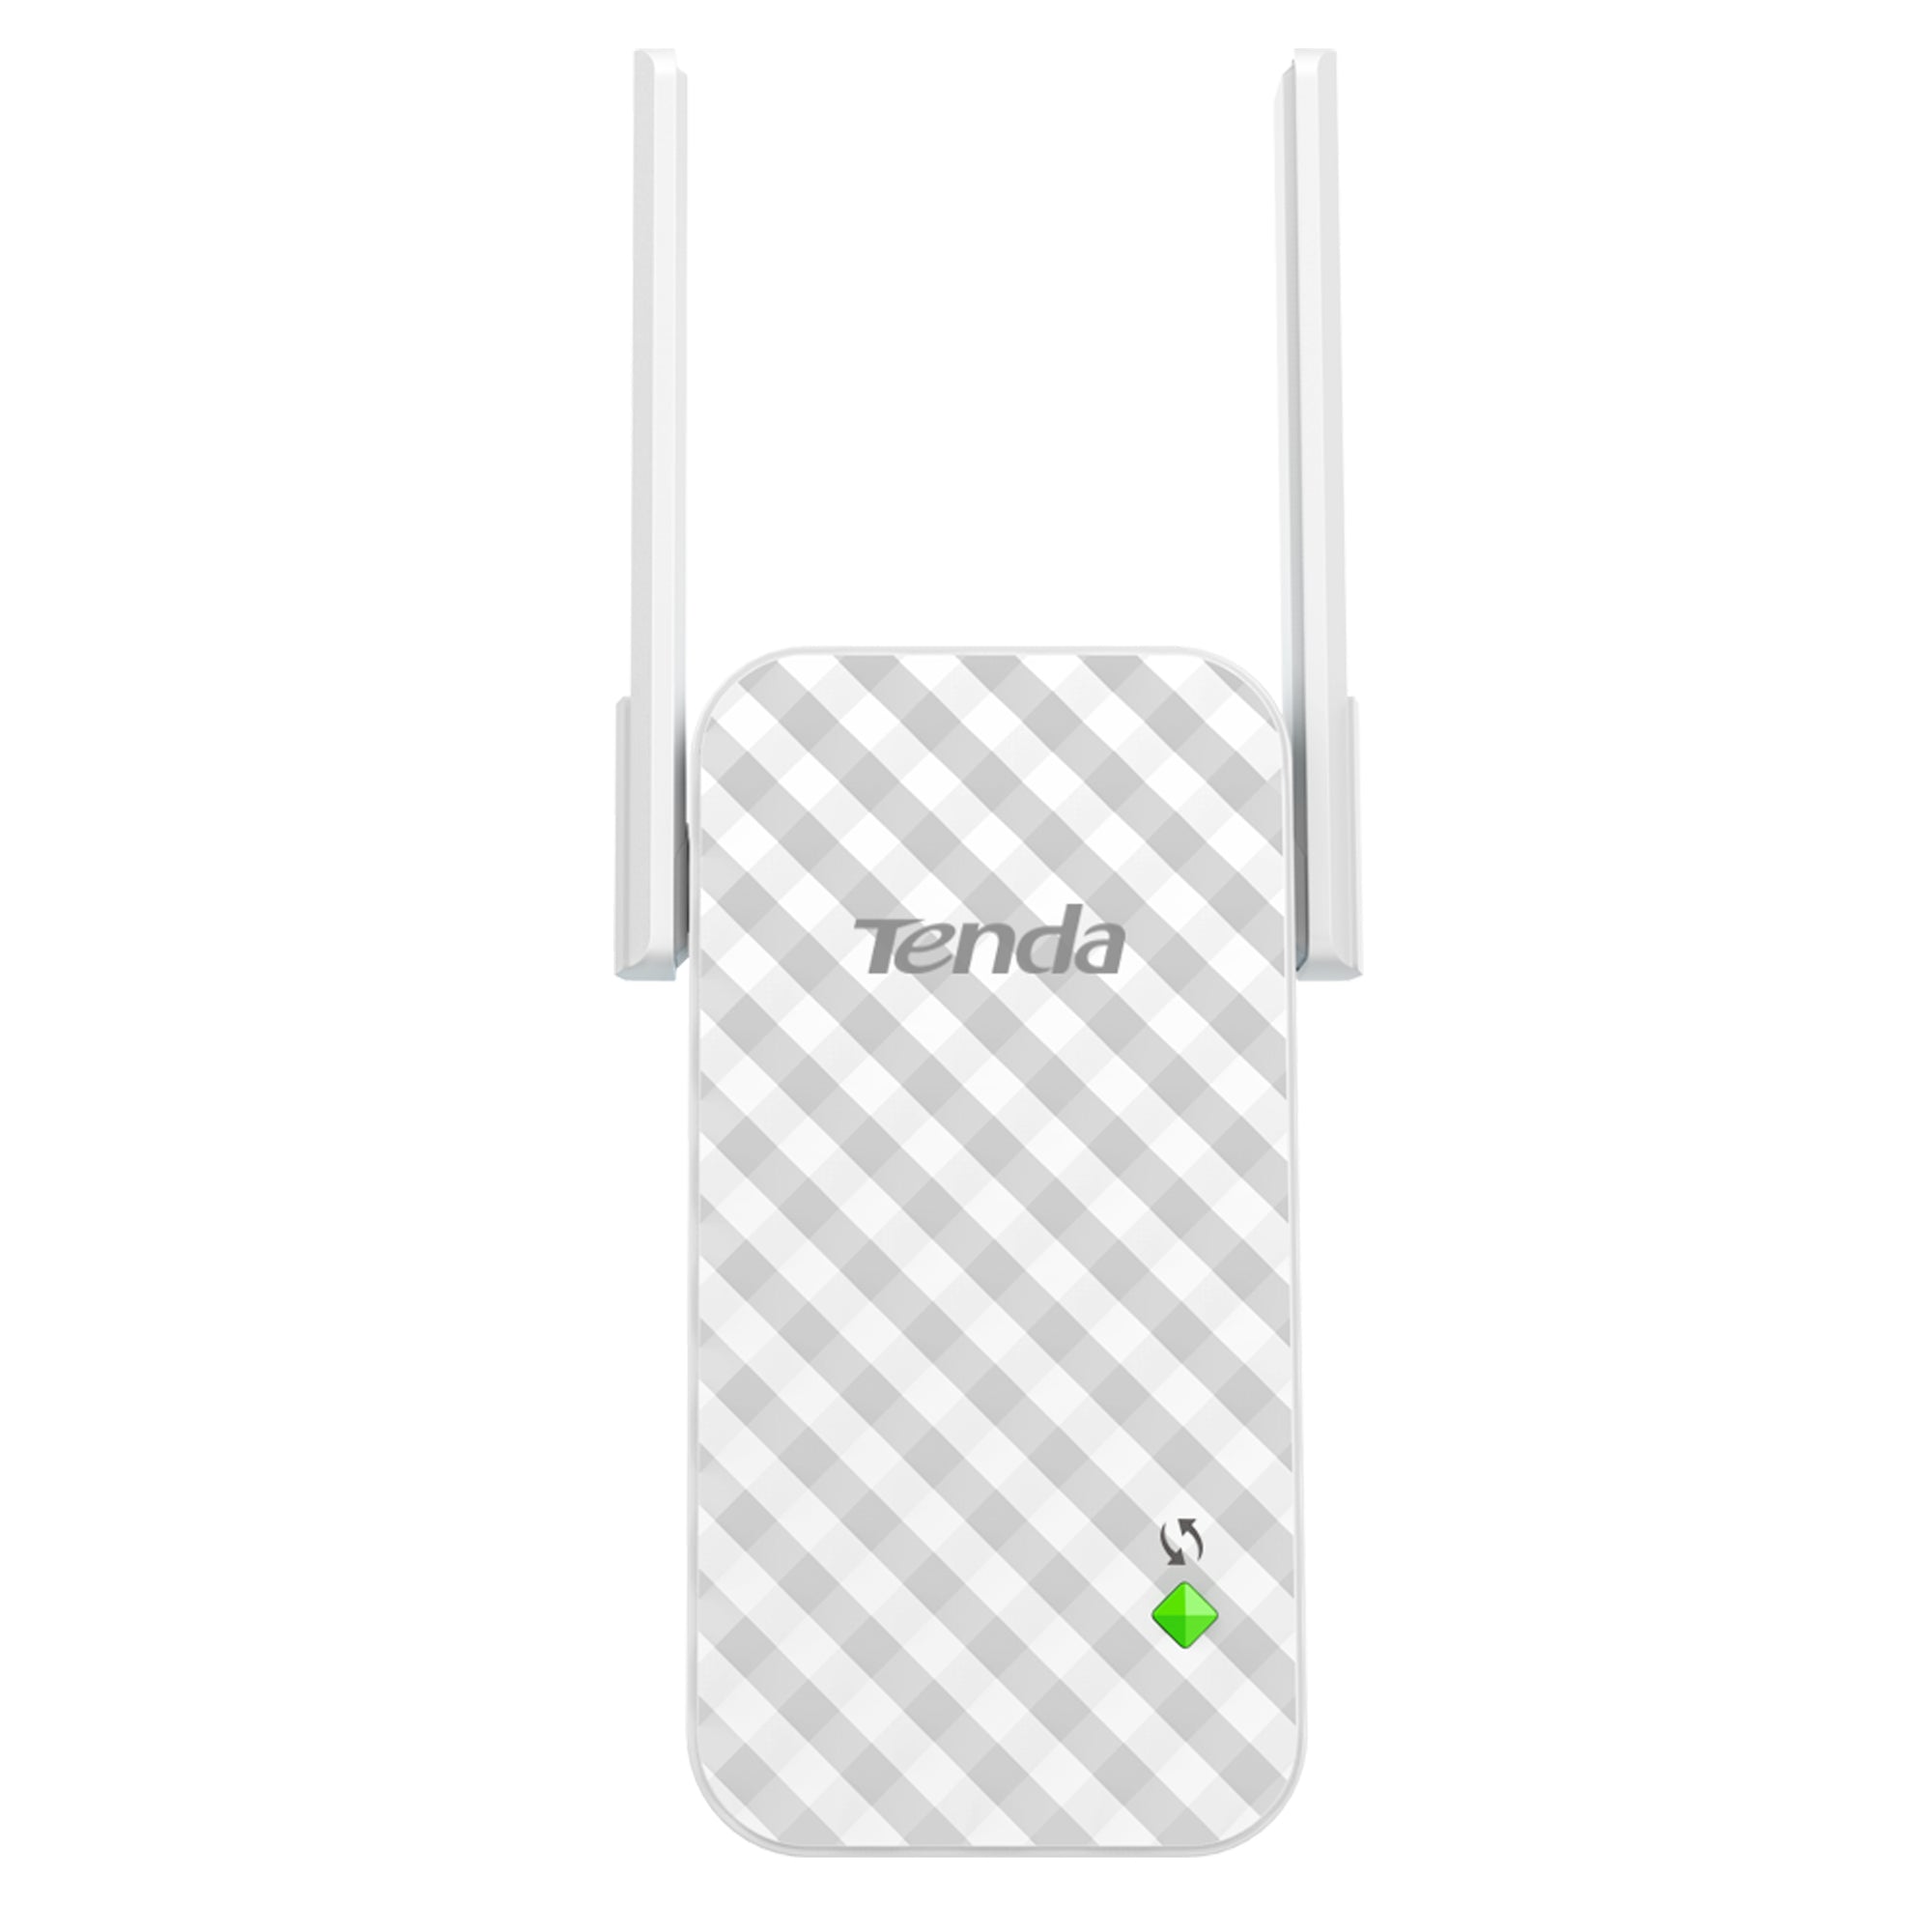 tenda-home-wireless-extender-n300-a9